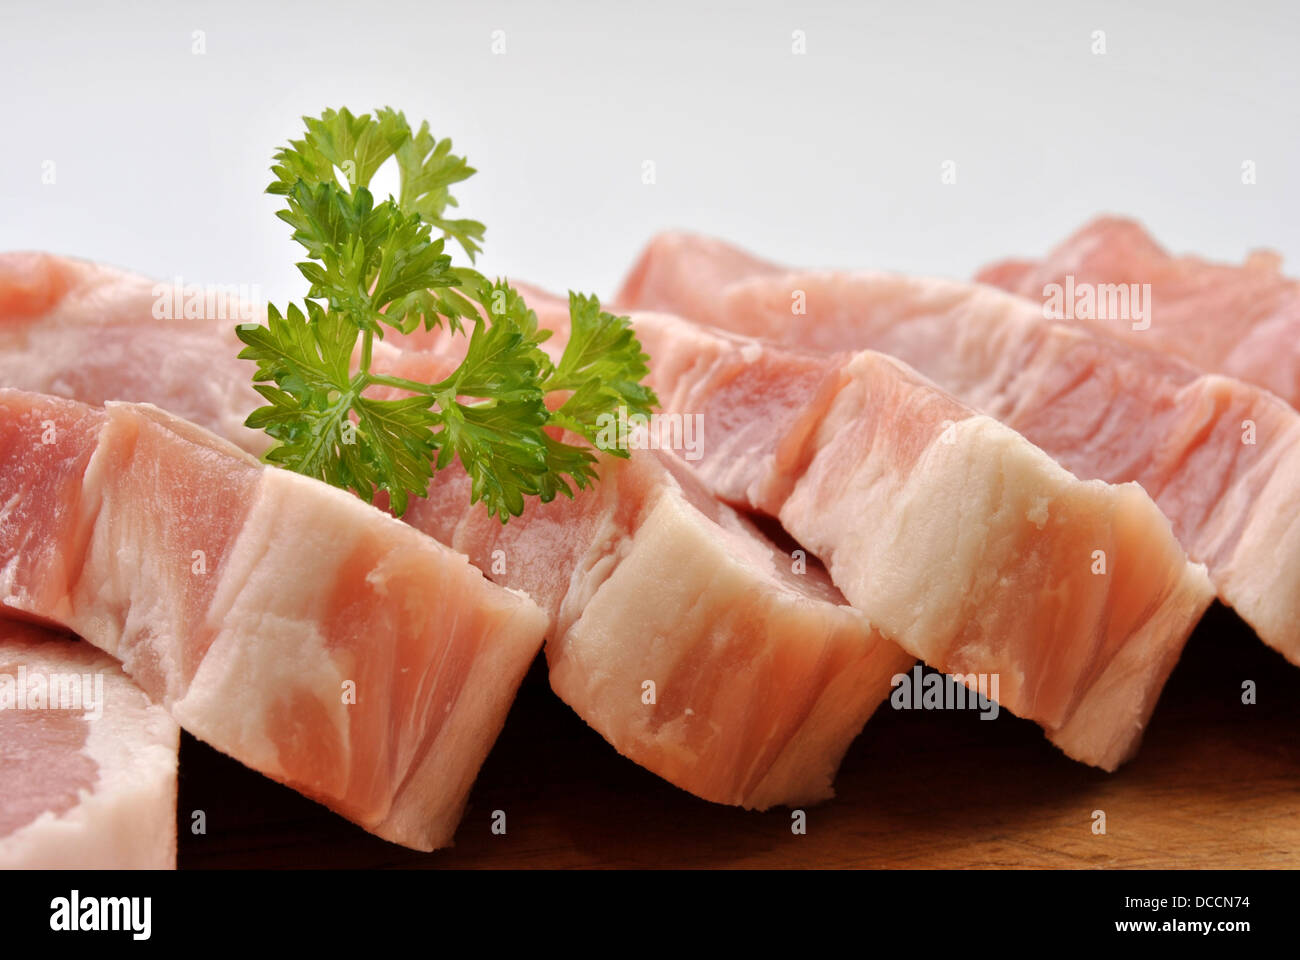 some raw organic pork chop and parsley Stock Photo